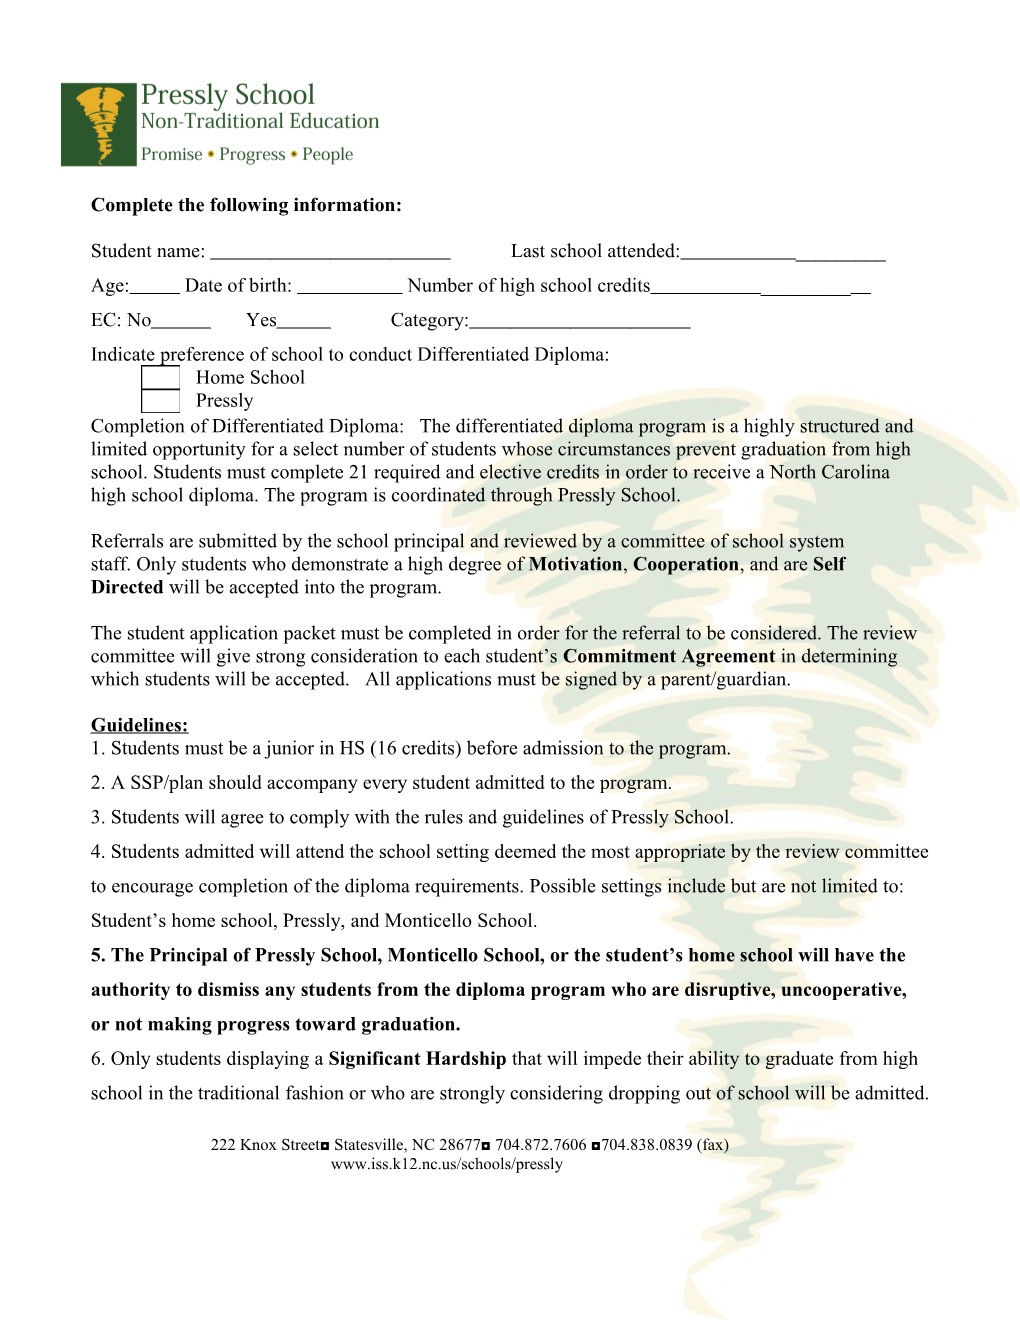 Pressly School Student Handbook Agreement